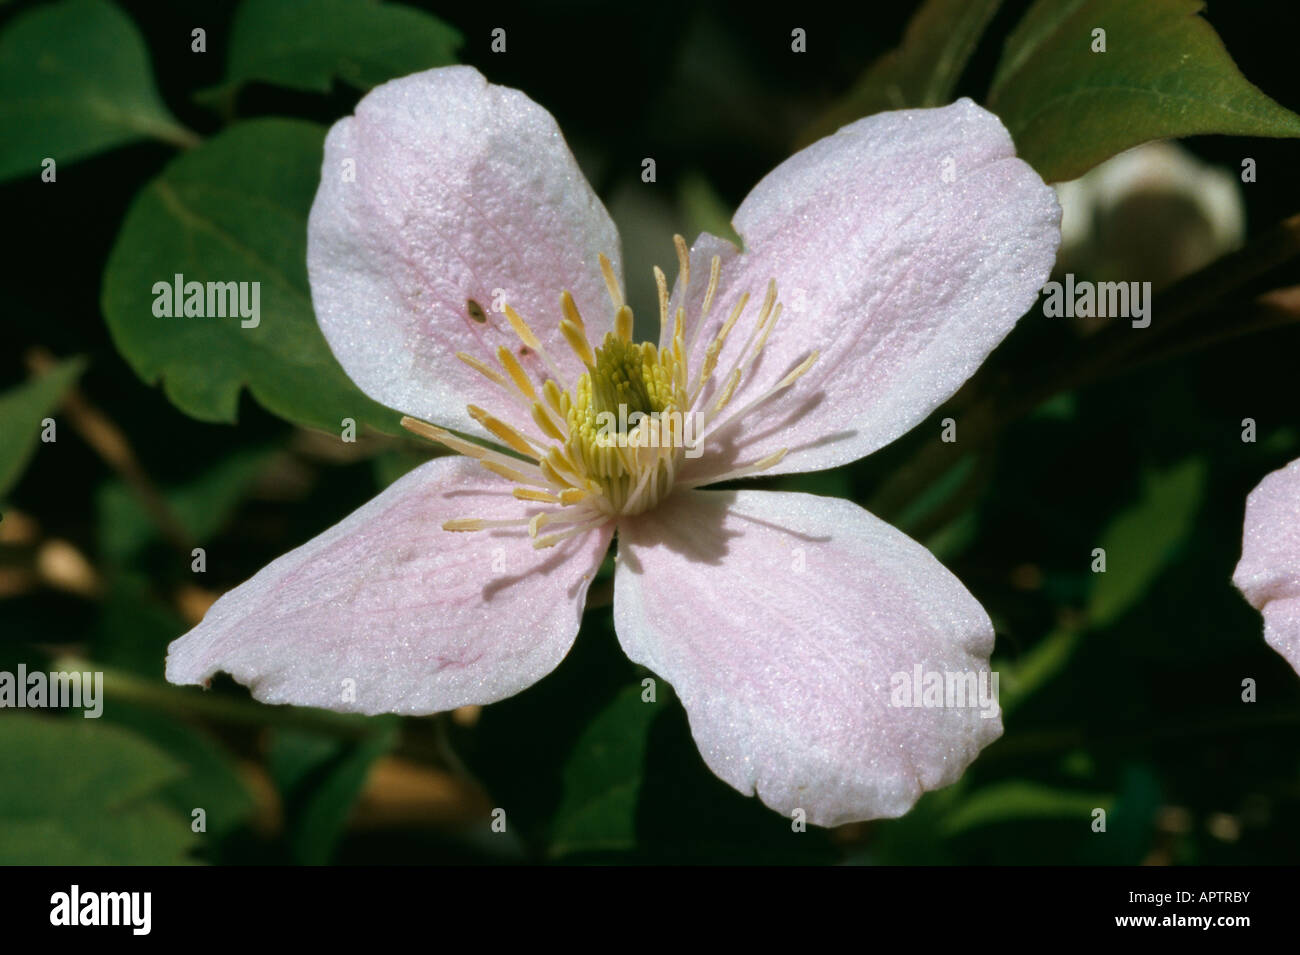 Clematis montana offre aimable invitation délicate rose Banque D'Images